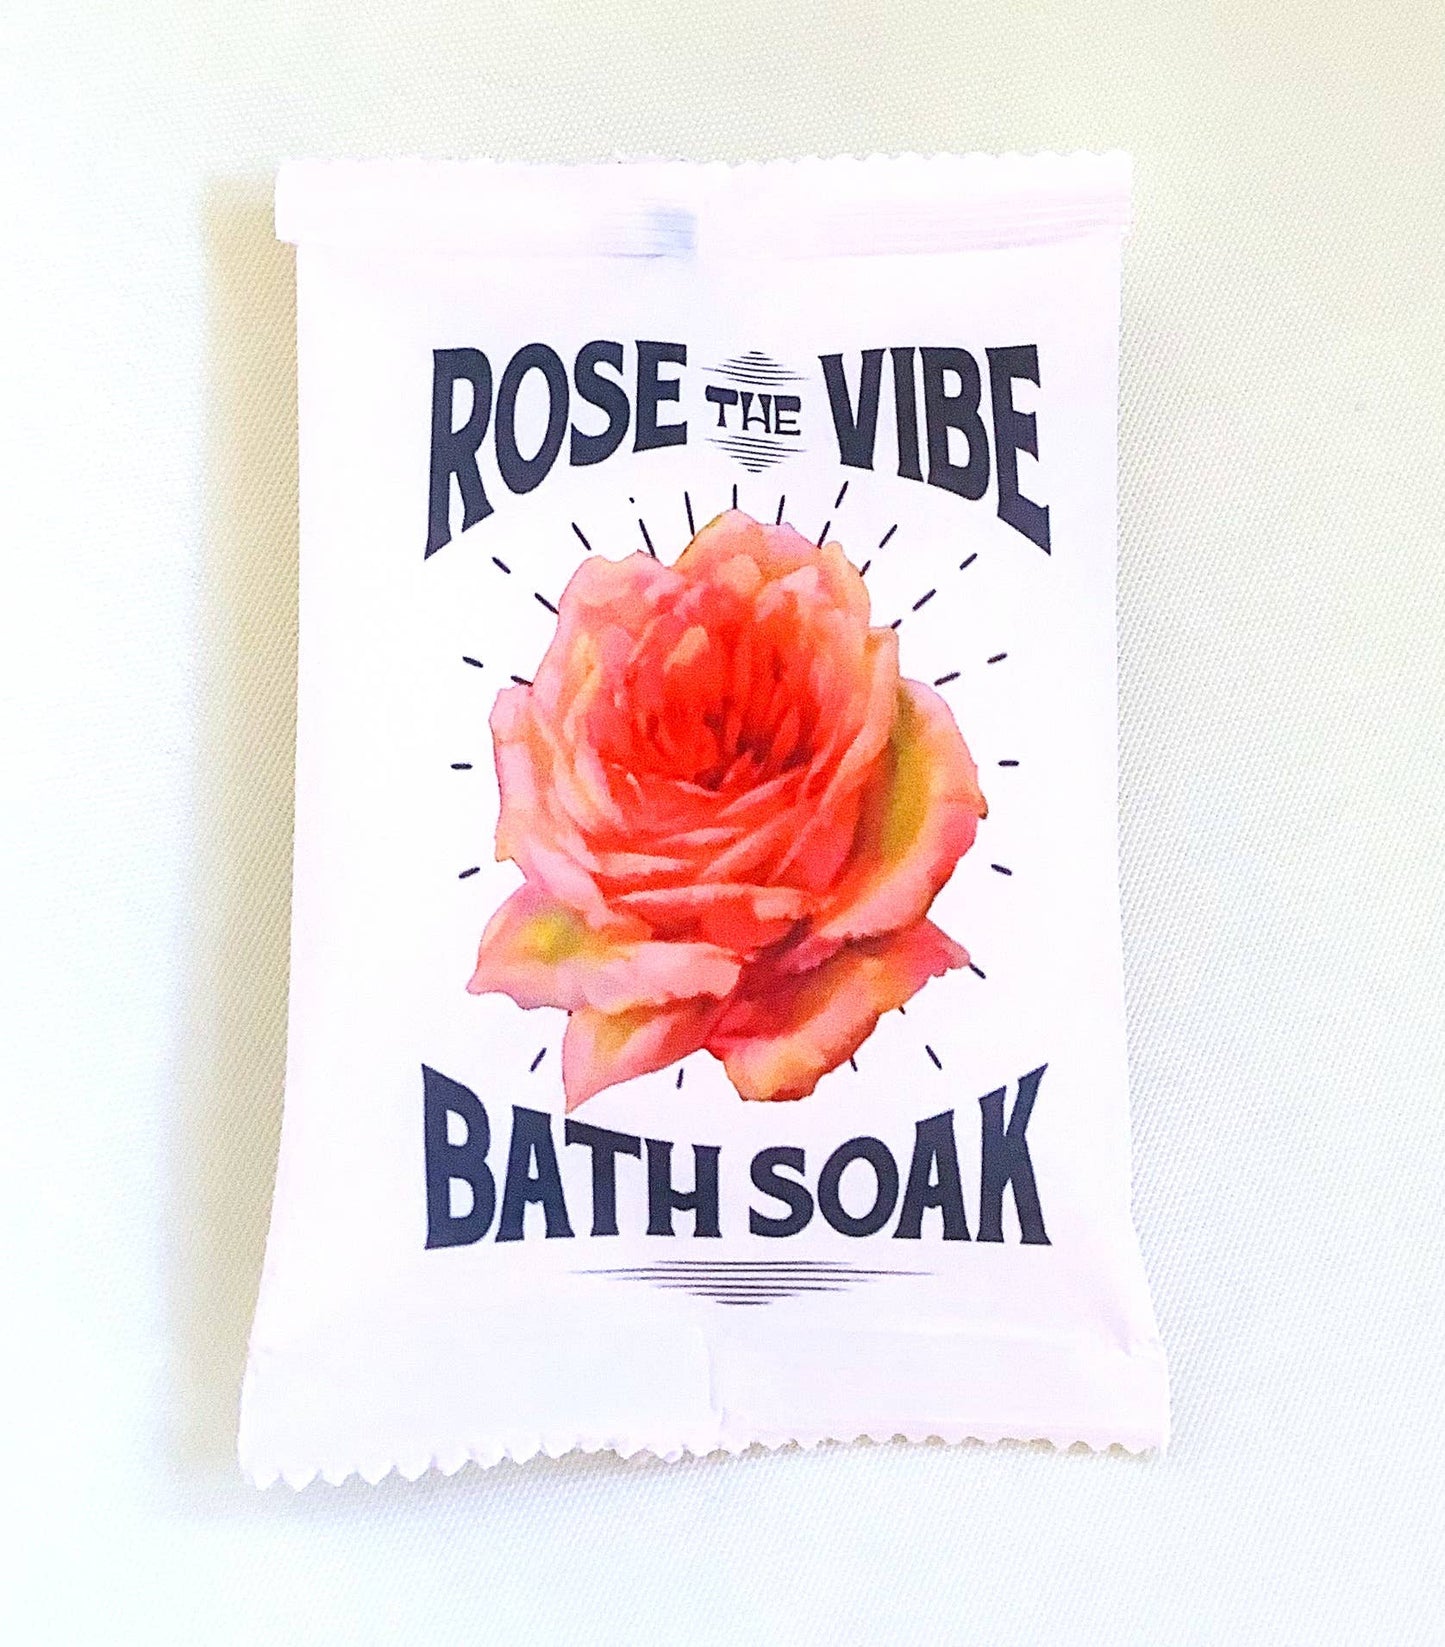 Rose the Vibe Bath Soak